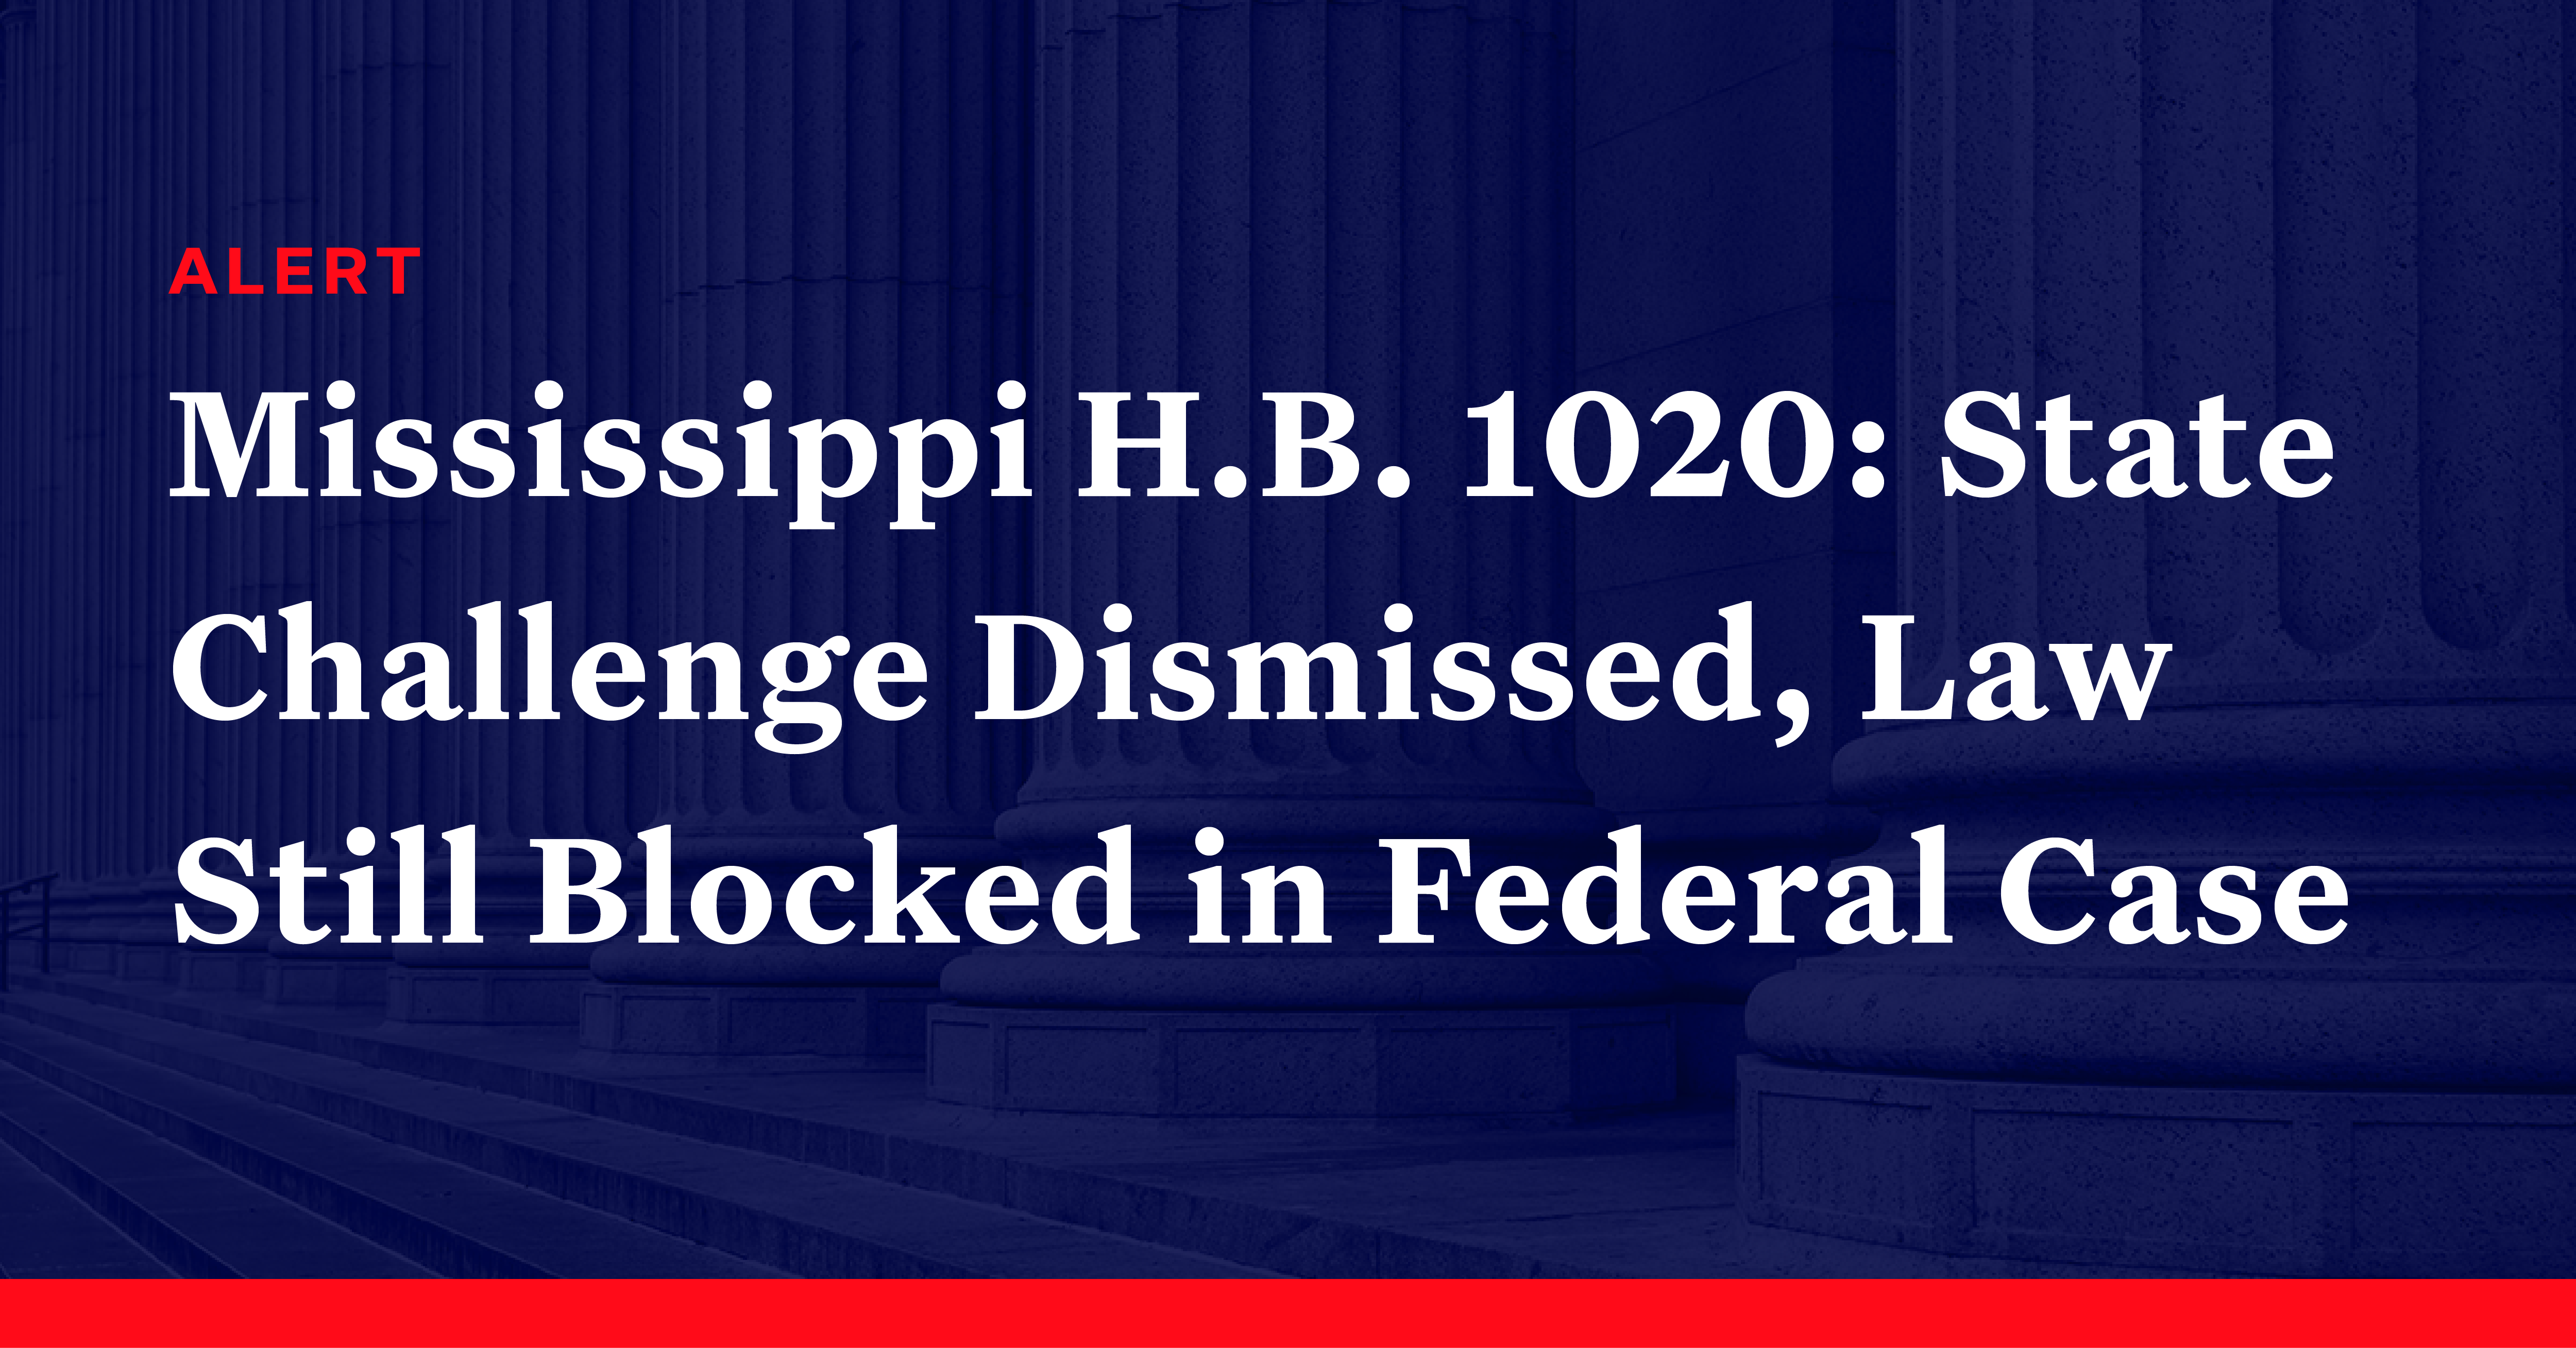 Mississippi Judge Dismisses Challenge to Law Targeting Jackson, but Law